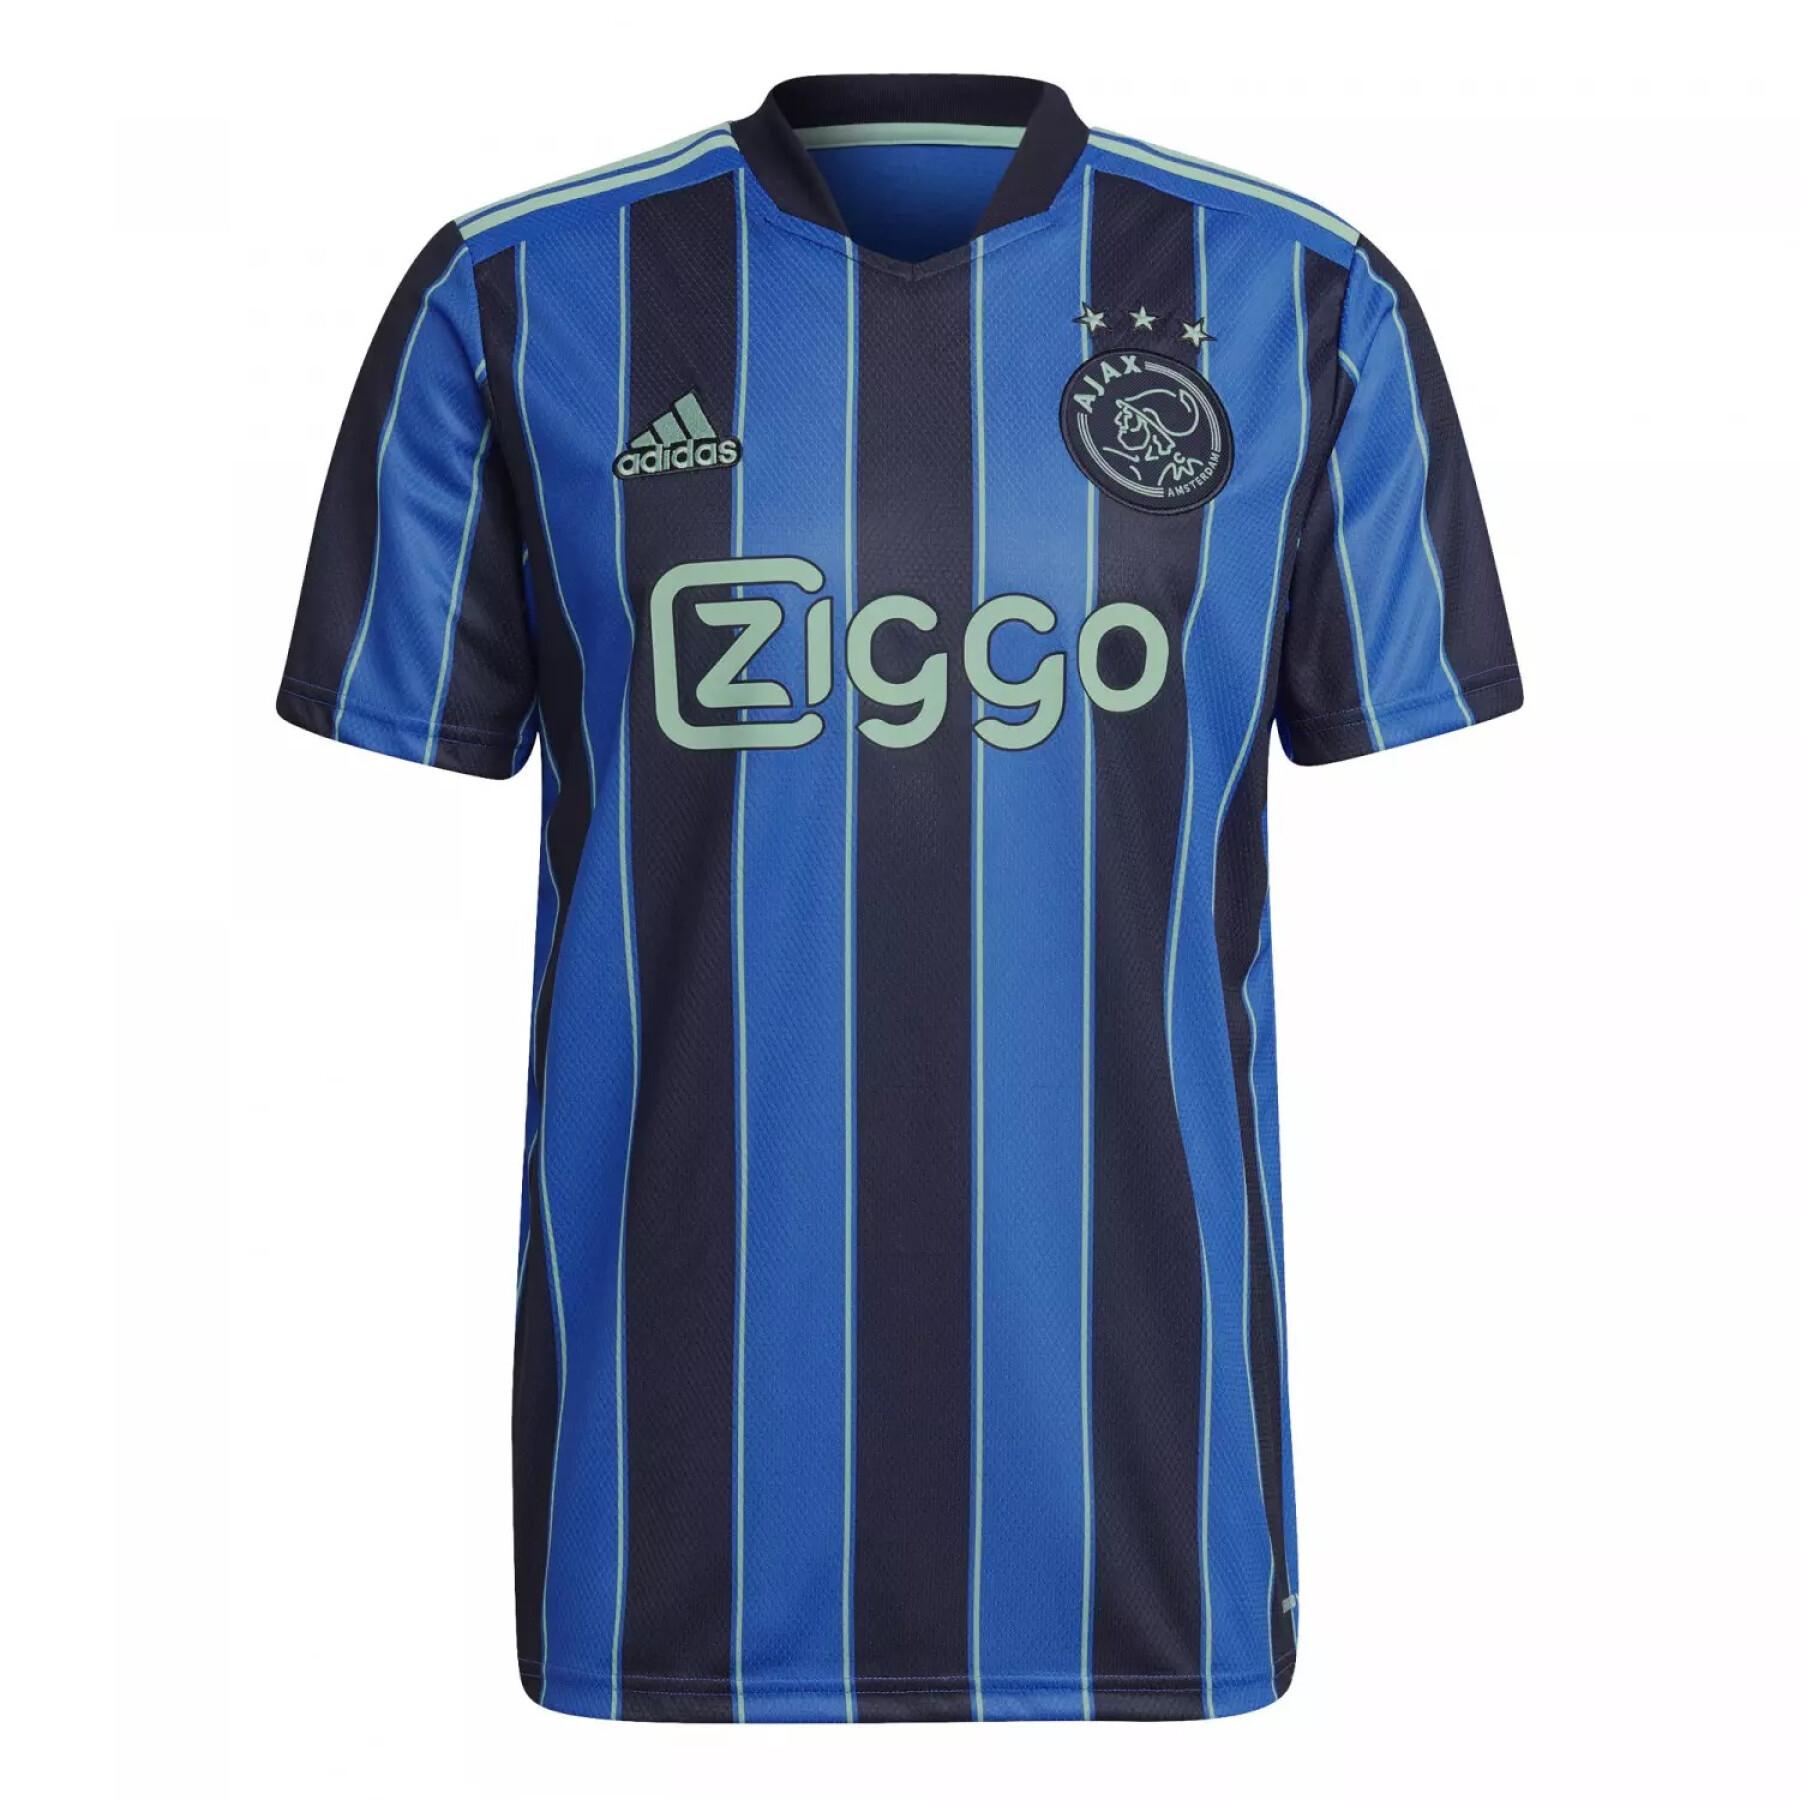 Outdoor jersey Ajax Amsterdam 2021/22